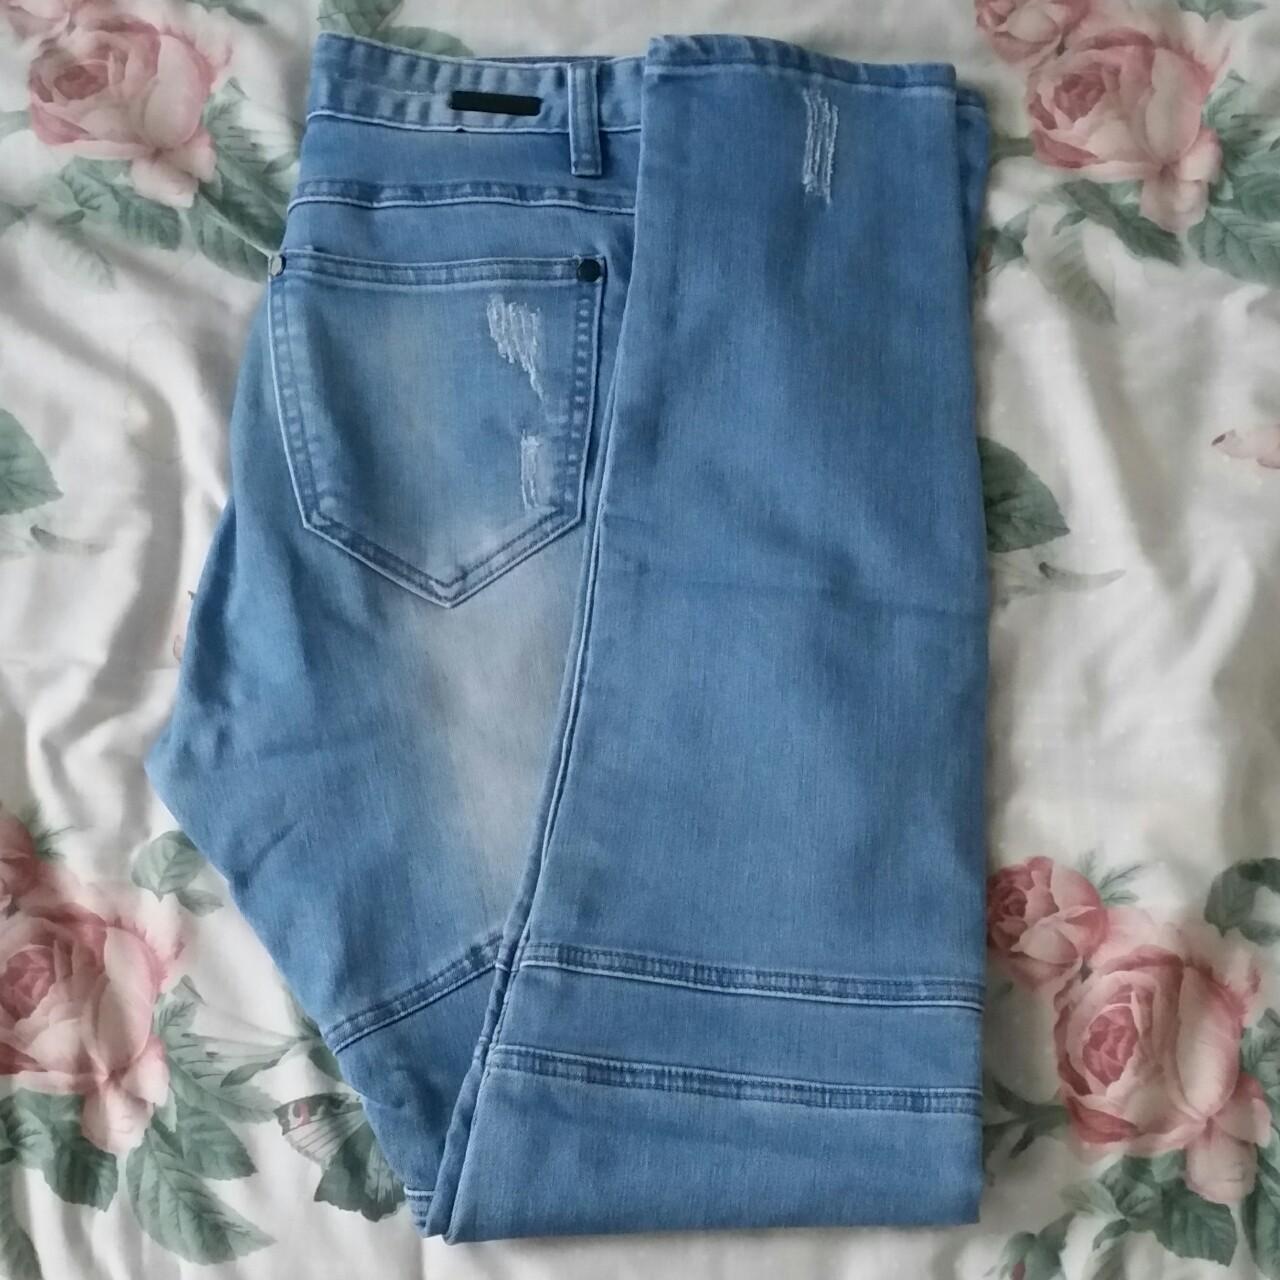 Product Image 1 - Represent biker jeans 
100% authentic